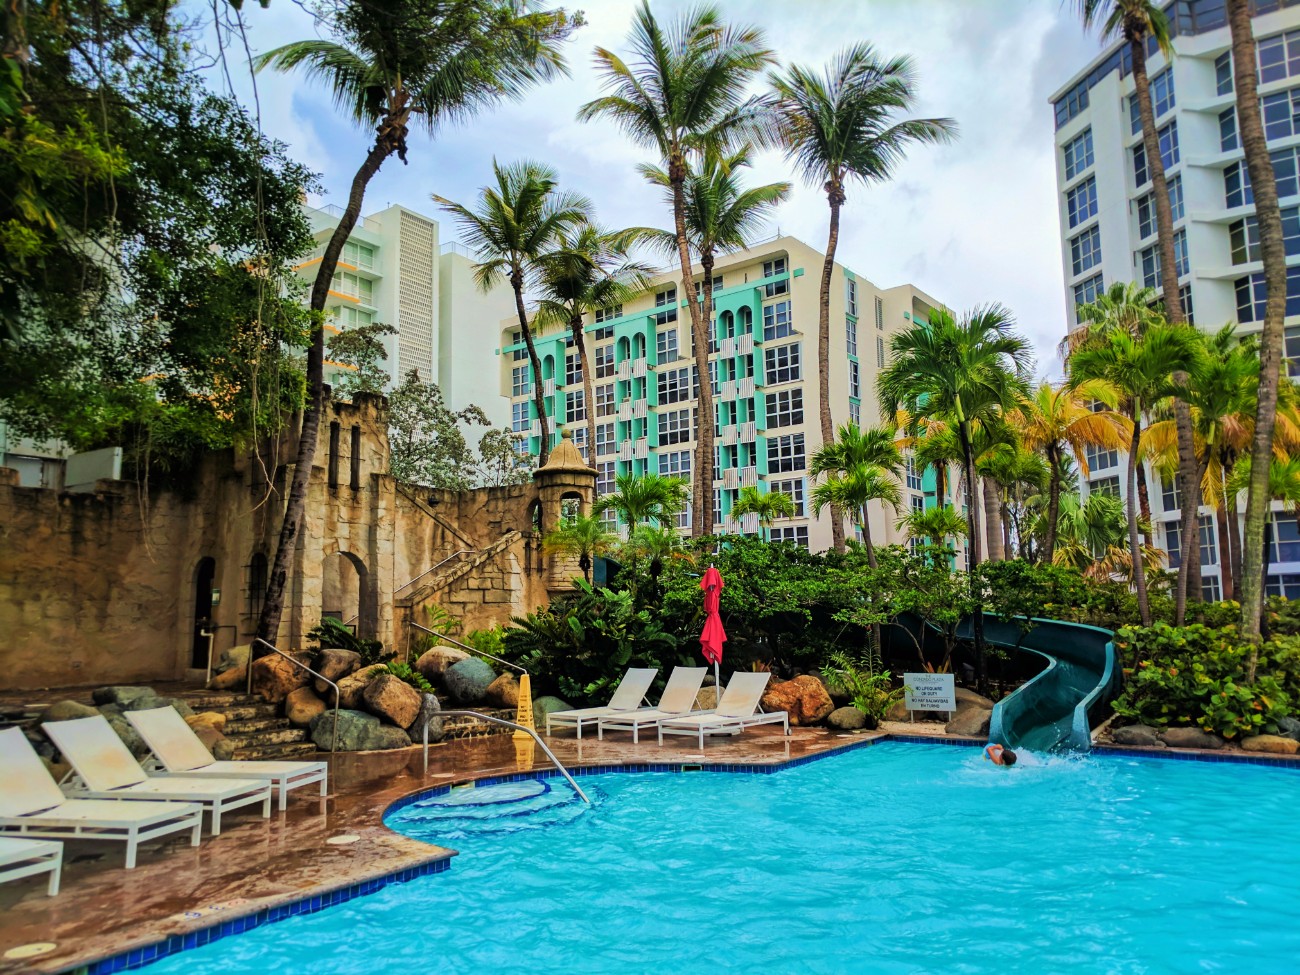 Waterslide Swimming pool at Condado Plaza Hilton San Juan Puerto Rico 1